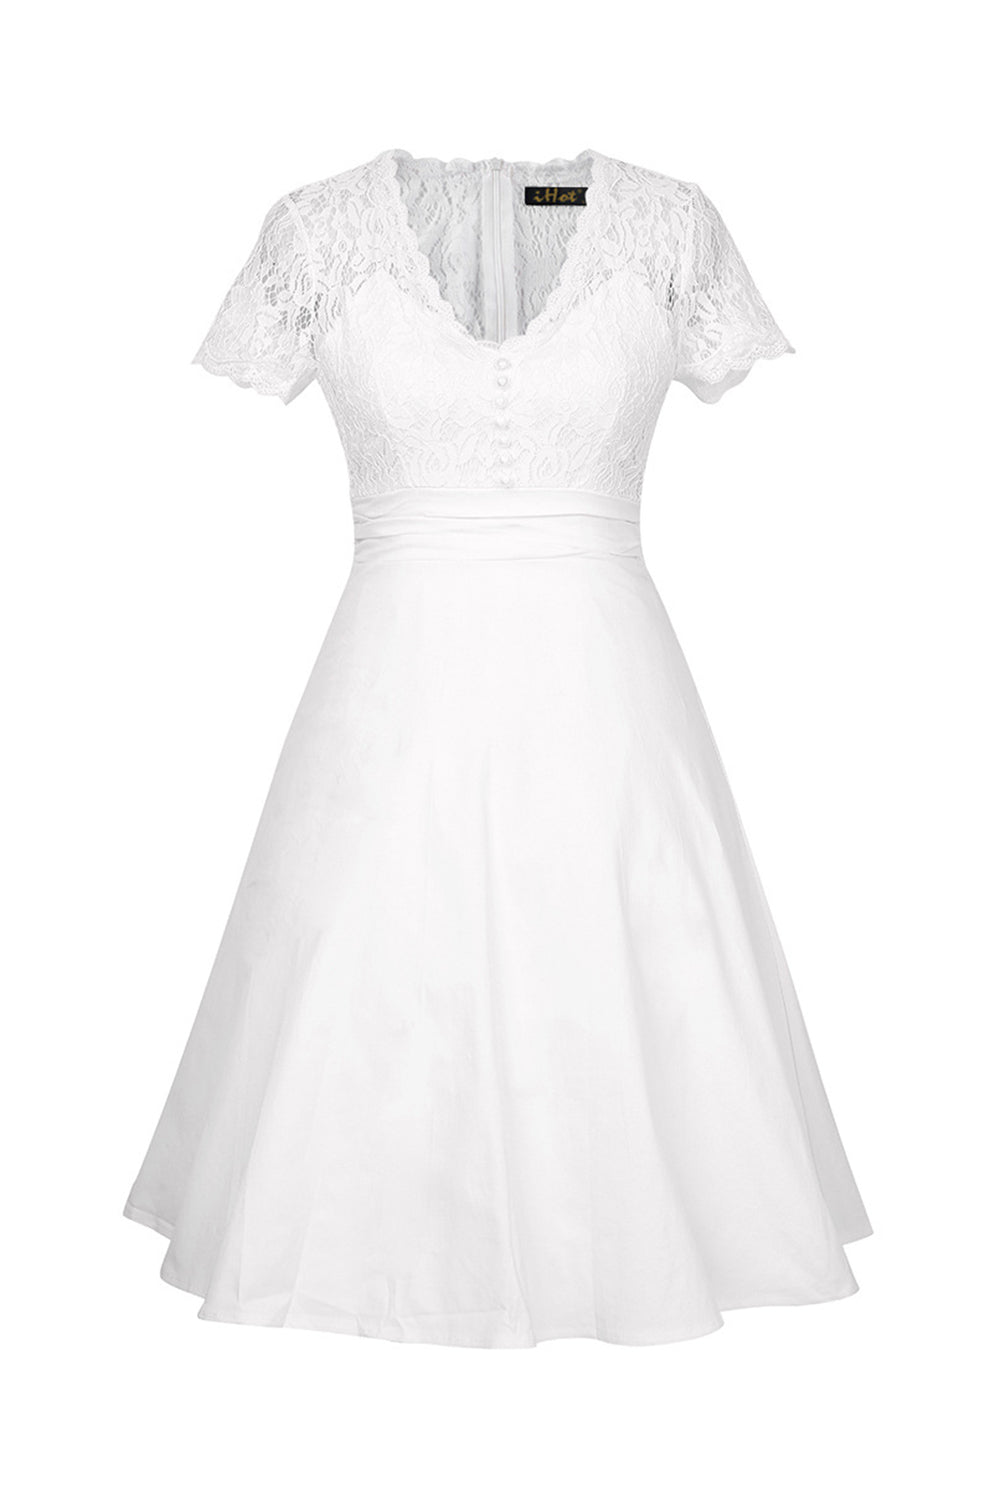 Branco Gola em V 1950s Vestido Com Renda